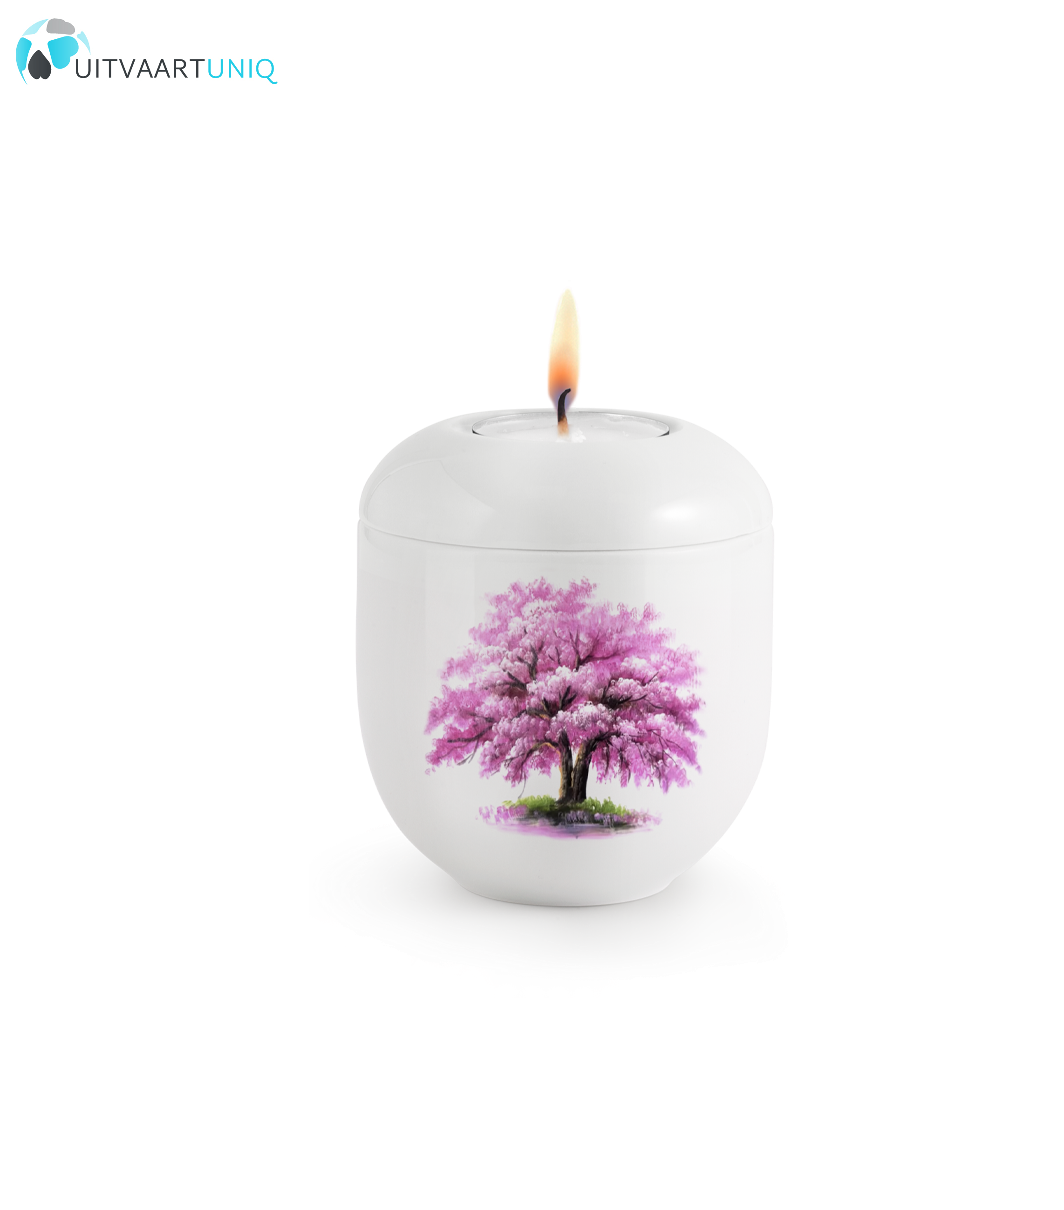  Mini urn Hoogglans wit magnoliaboom – met lichtje